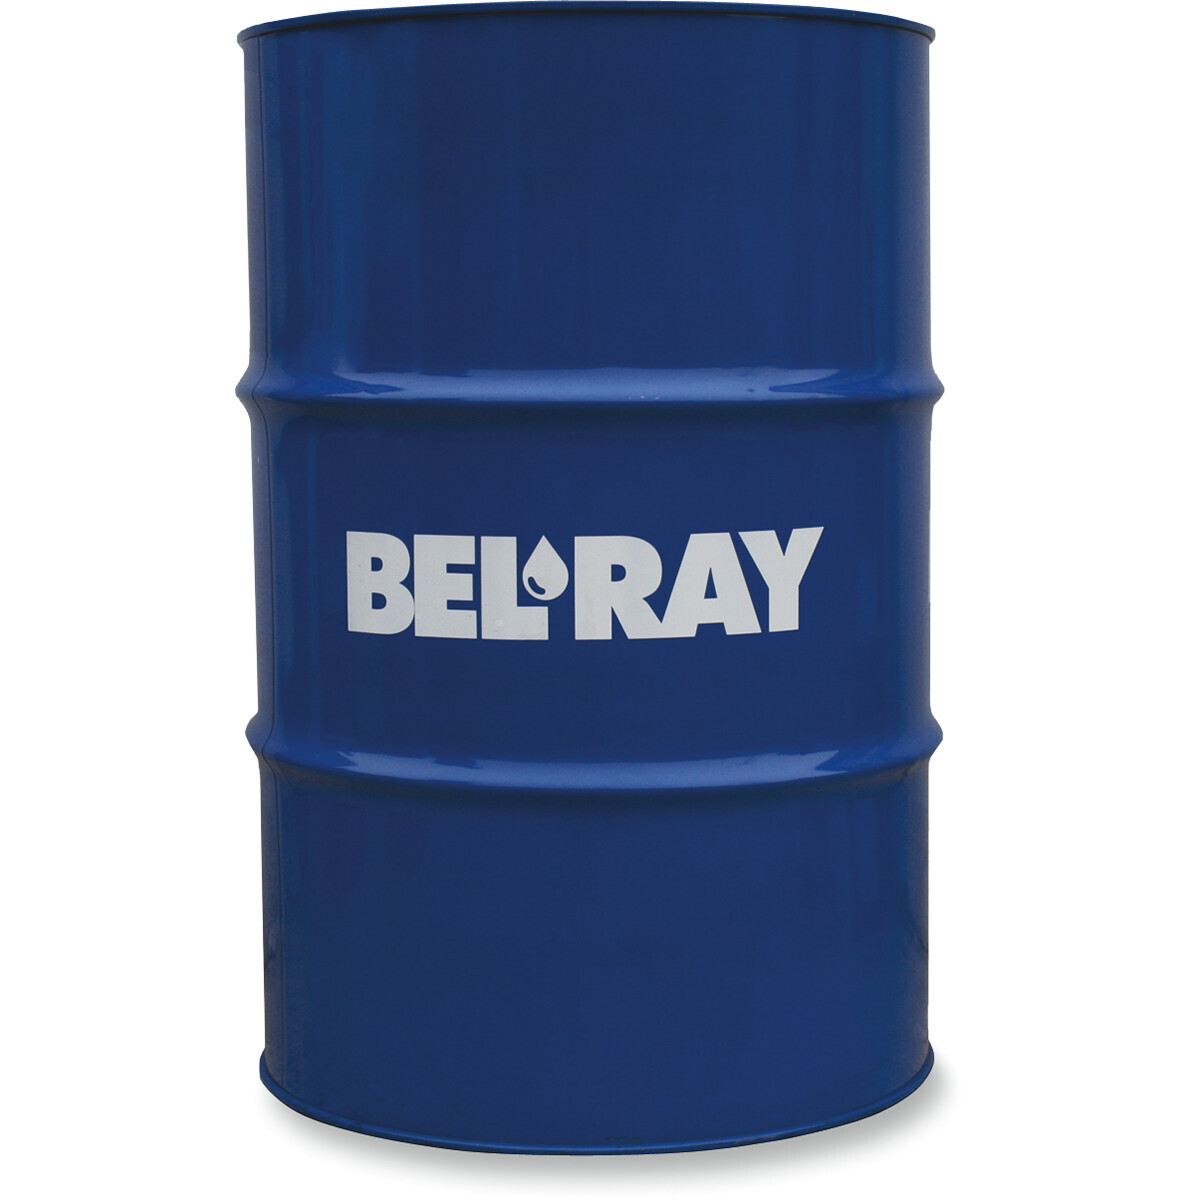 BEL-RAY
EXL MINERAL 4-STROKE ENGINE OIL 10W-40 208 LITER